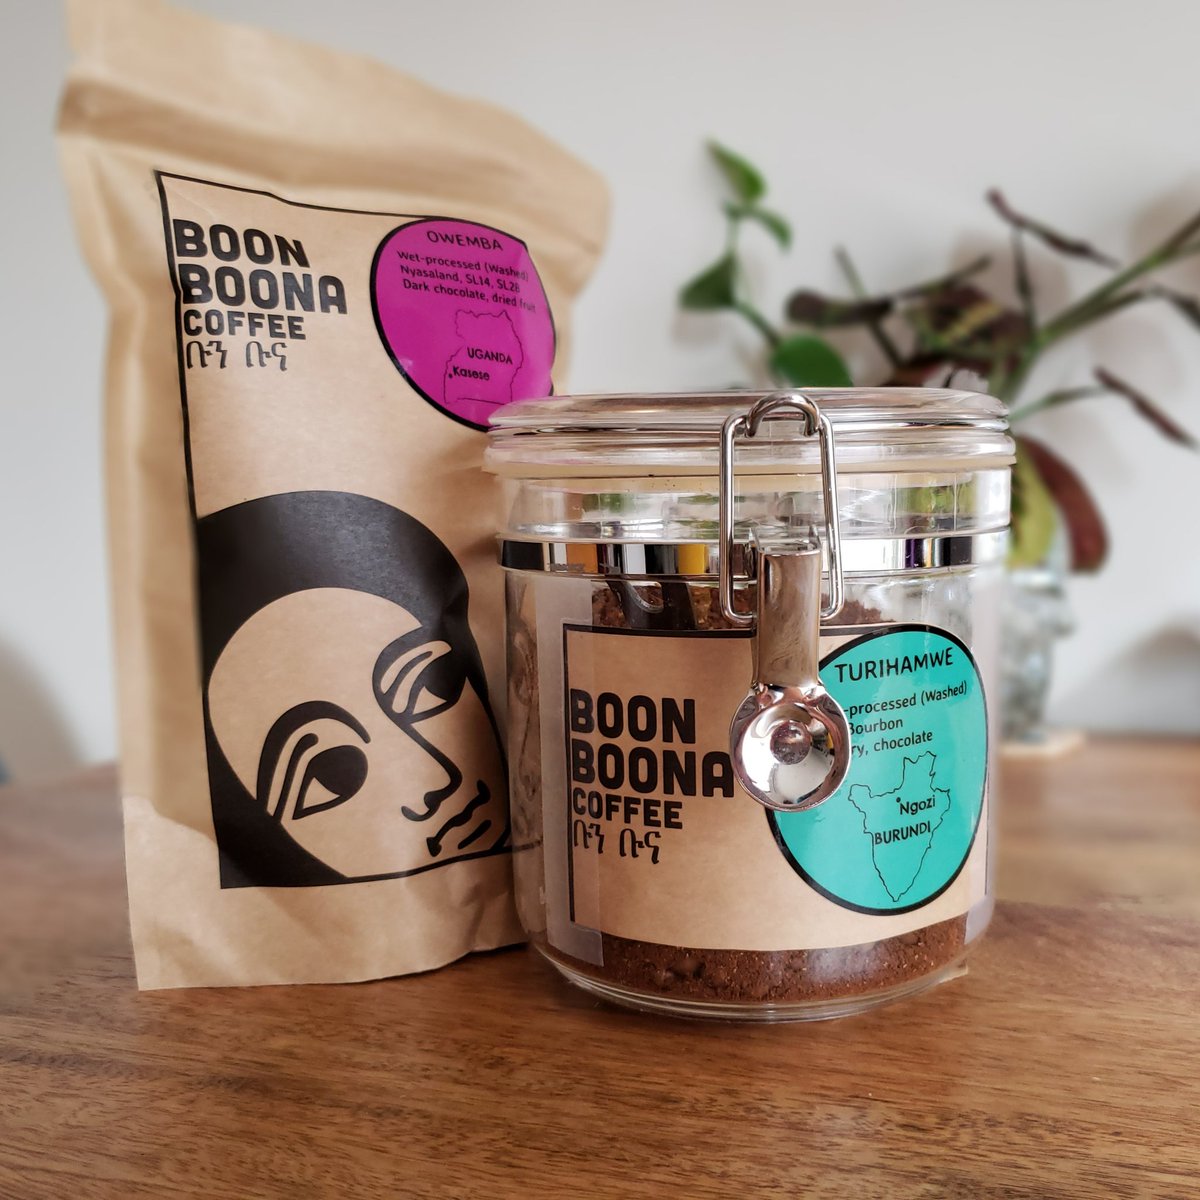 Boon Boona coffee beans